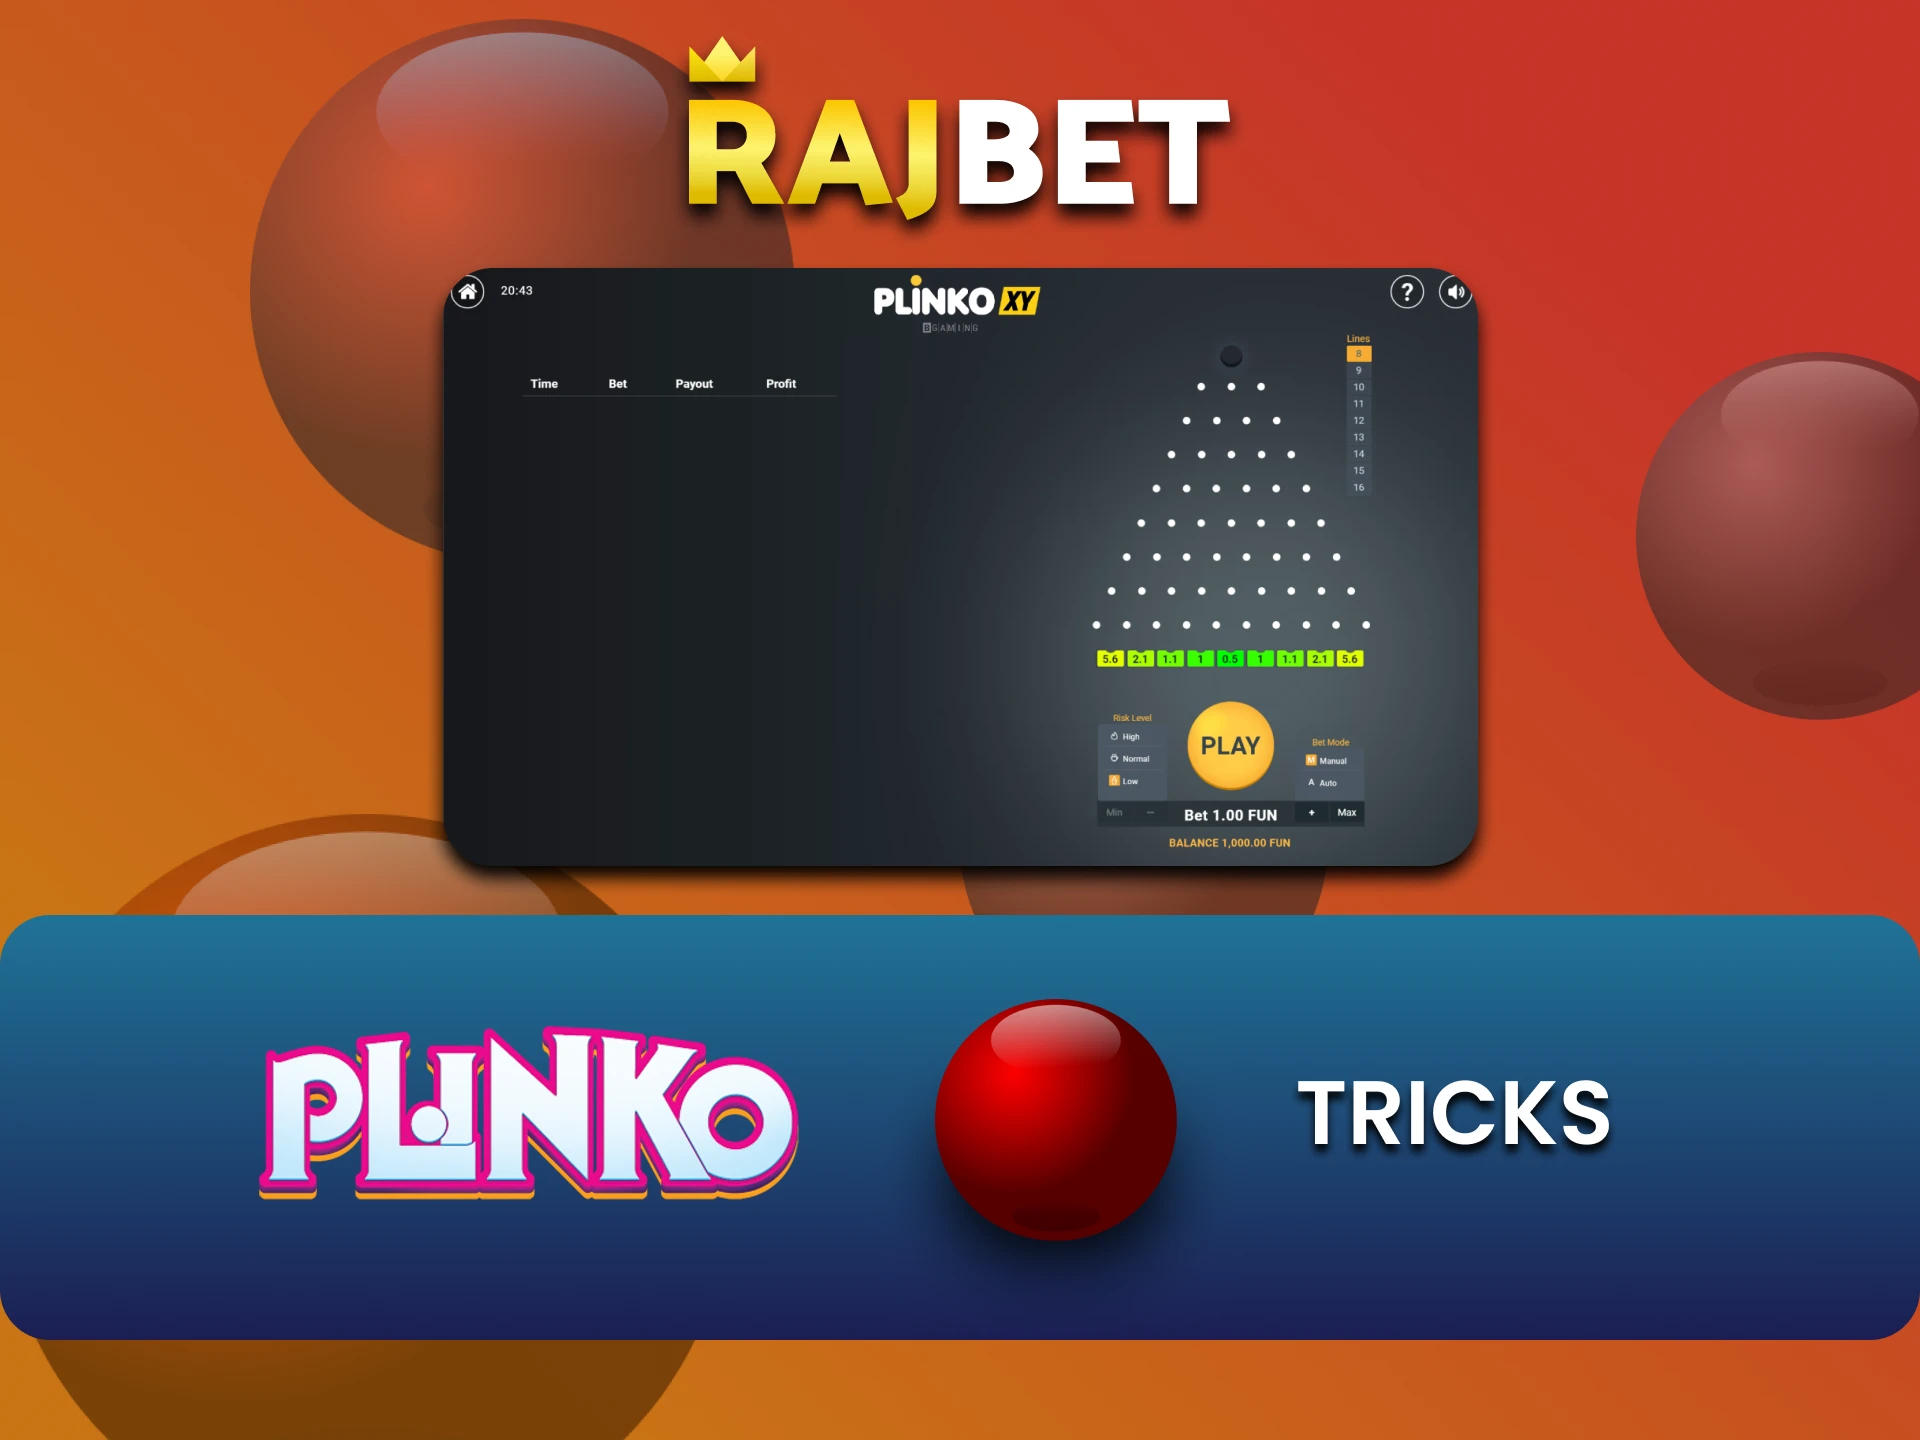 Learn the tricks to win at Plinko on Rajbet.